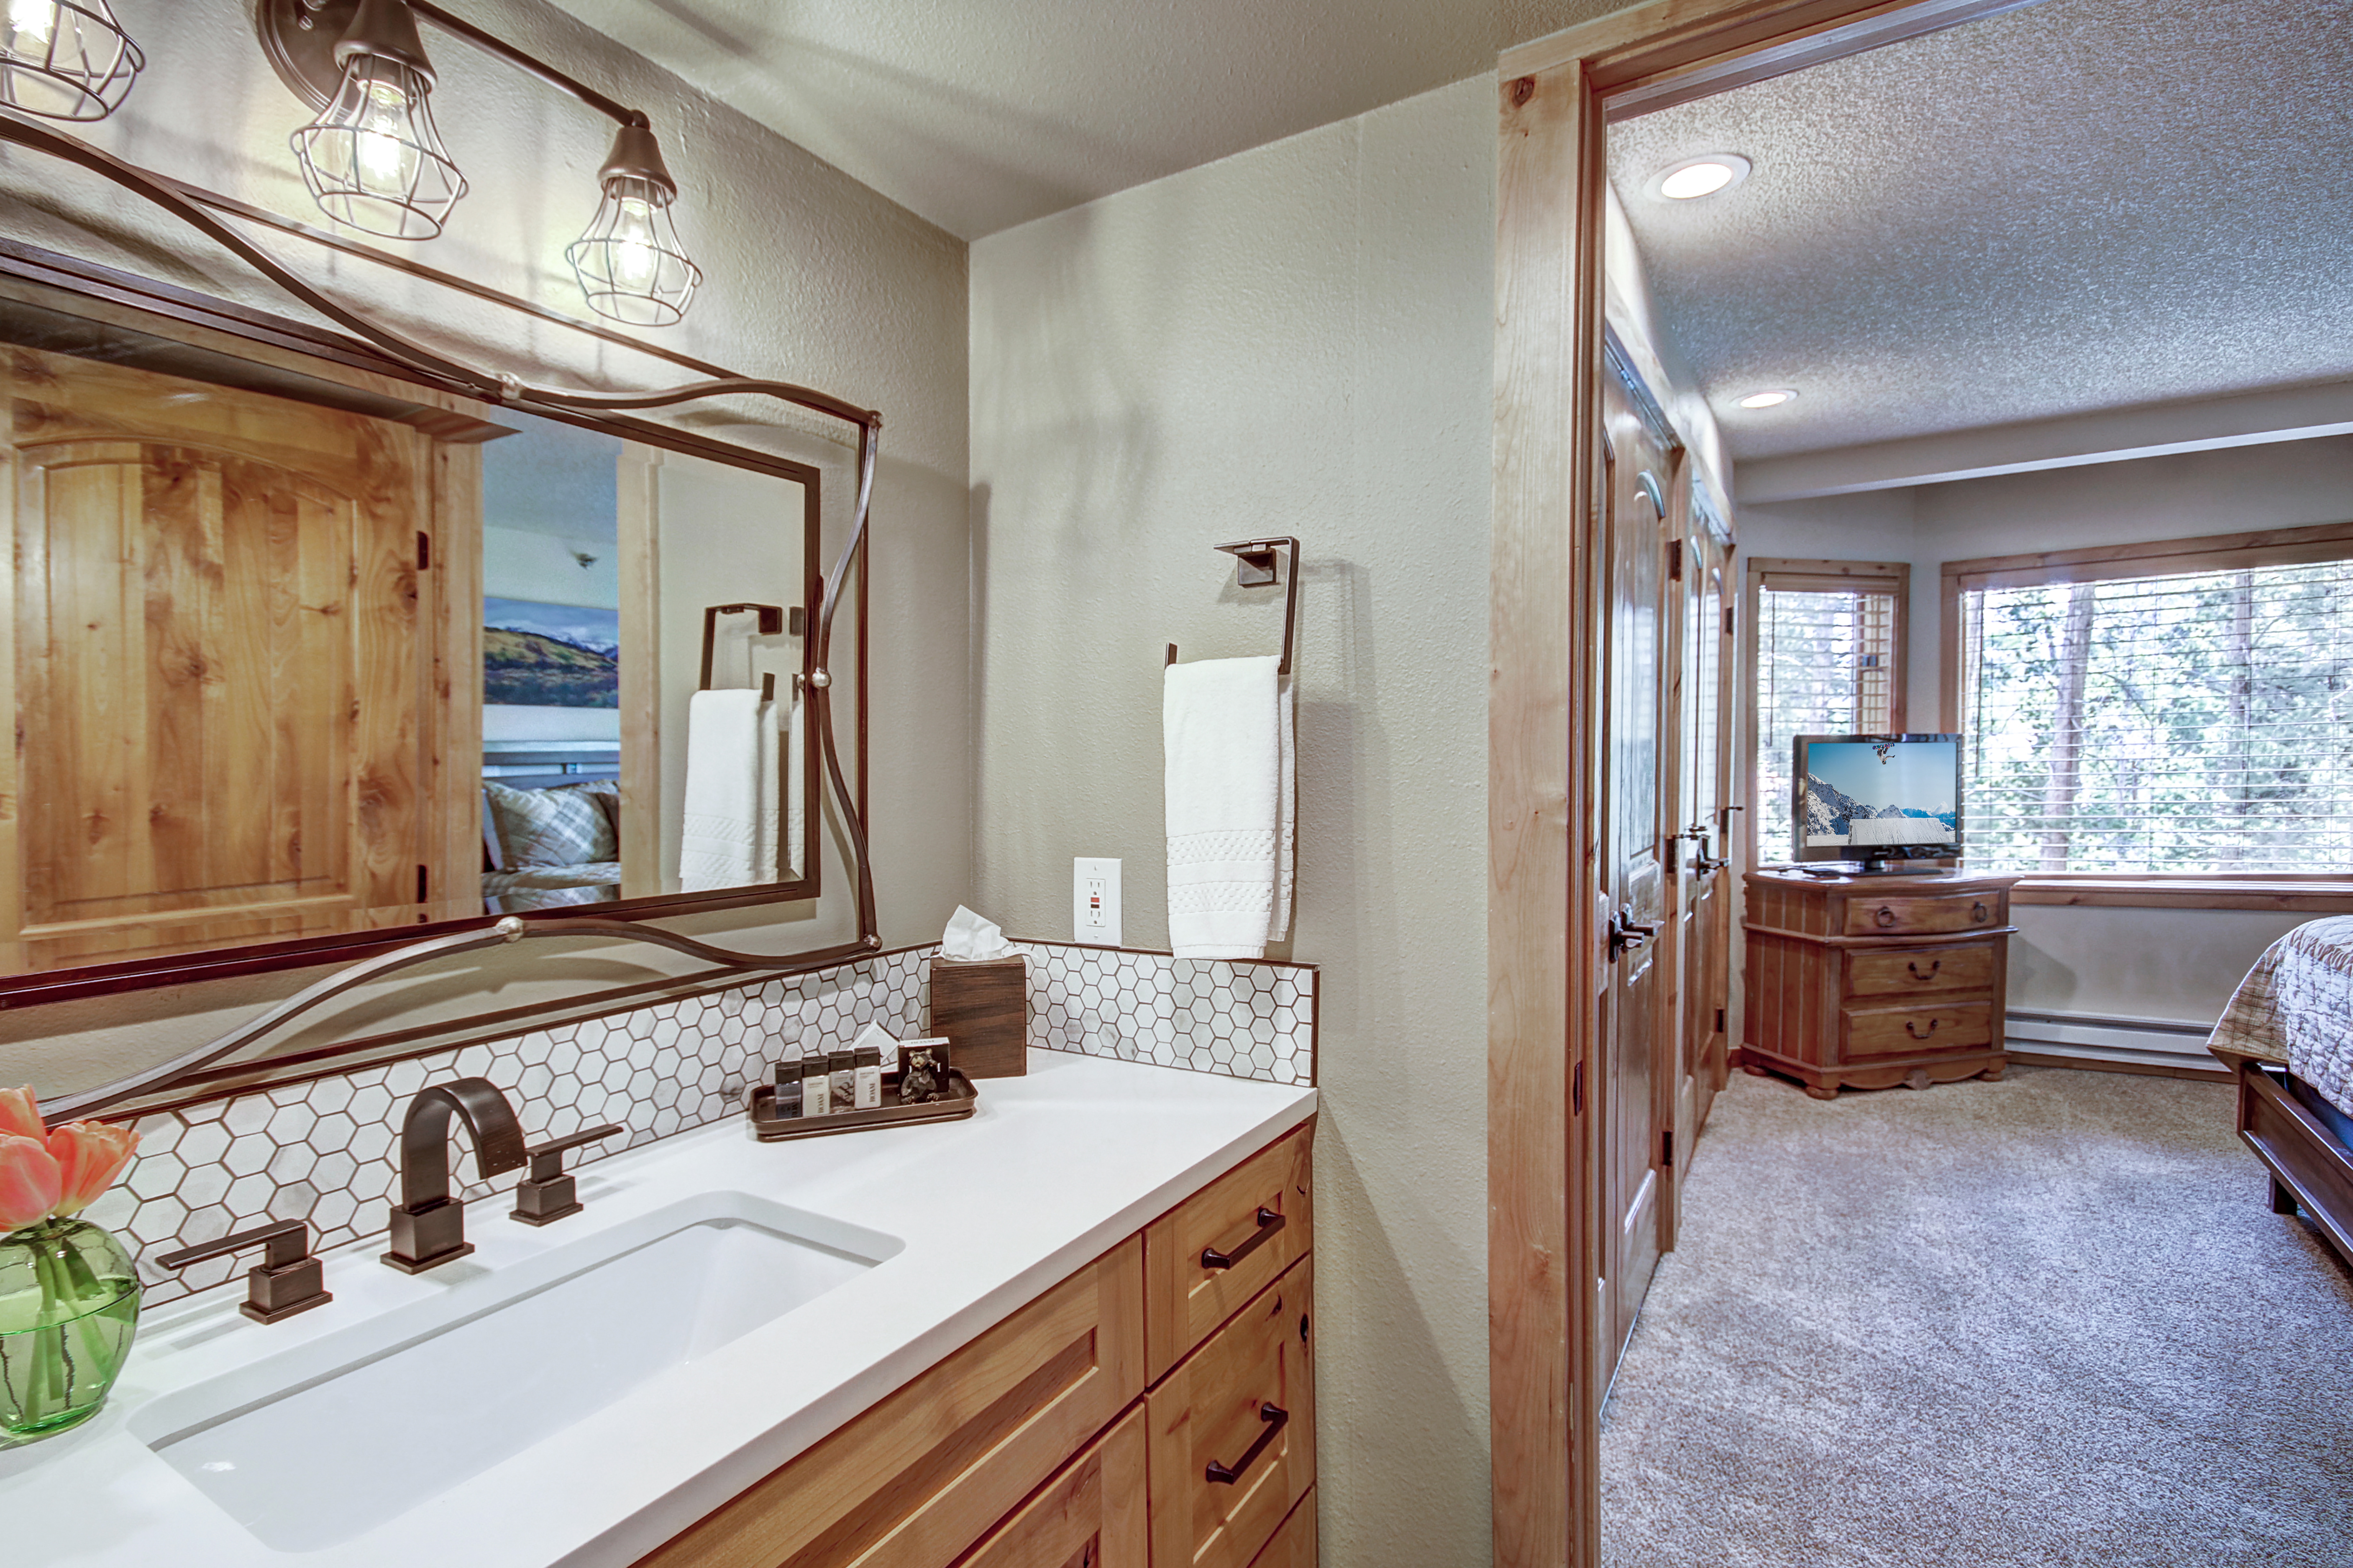 Additional view of master private bath - Atrium 108 Breckenridge Vacation Rental